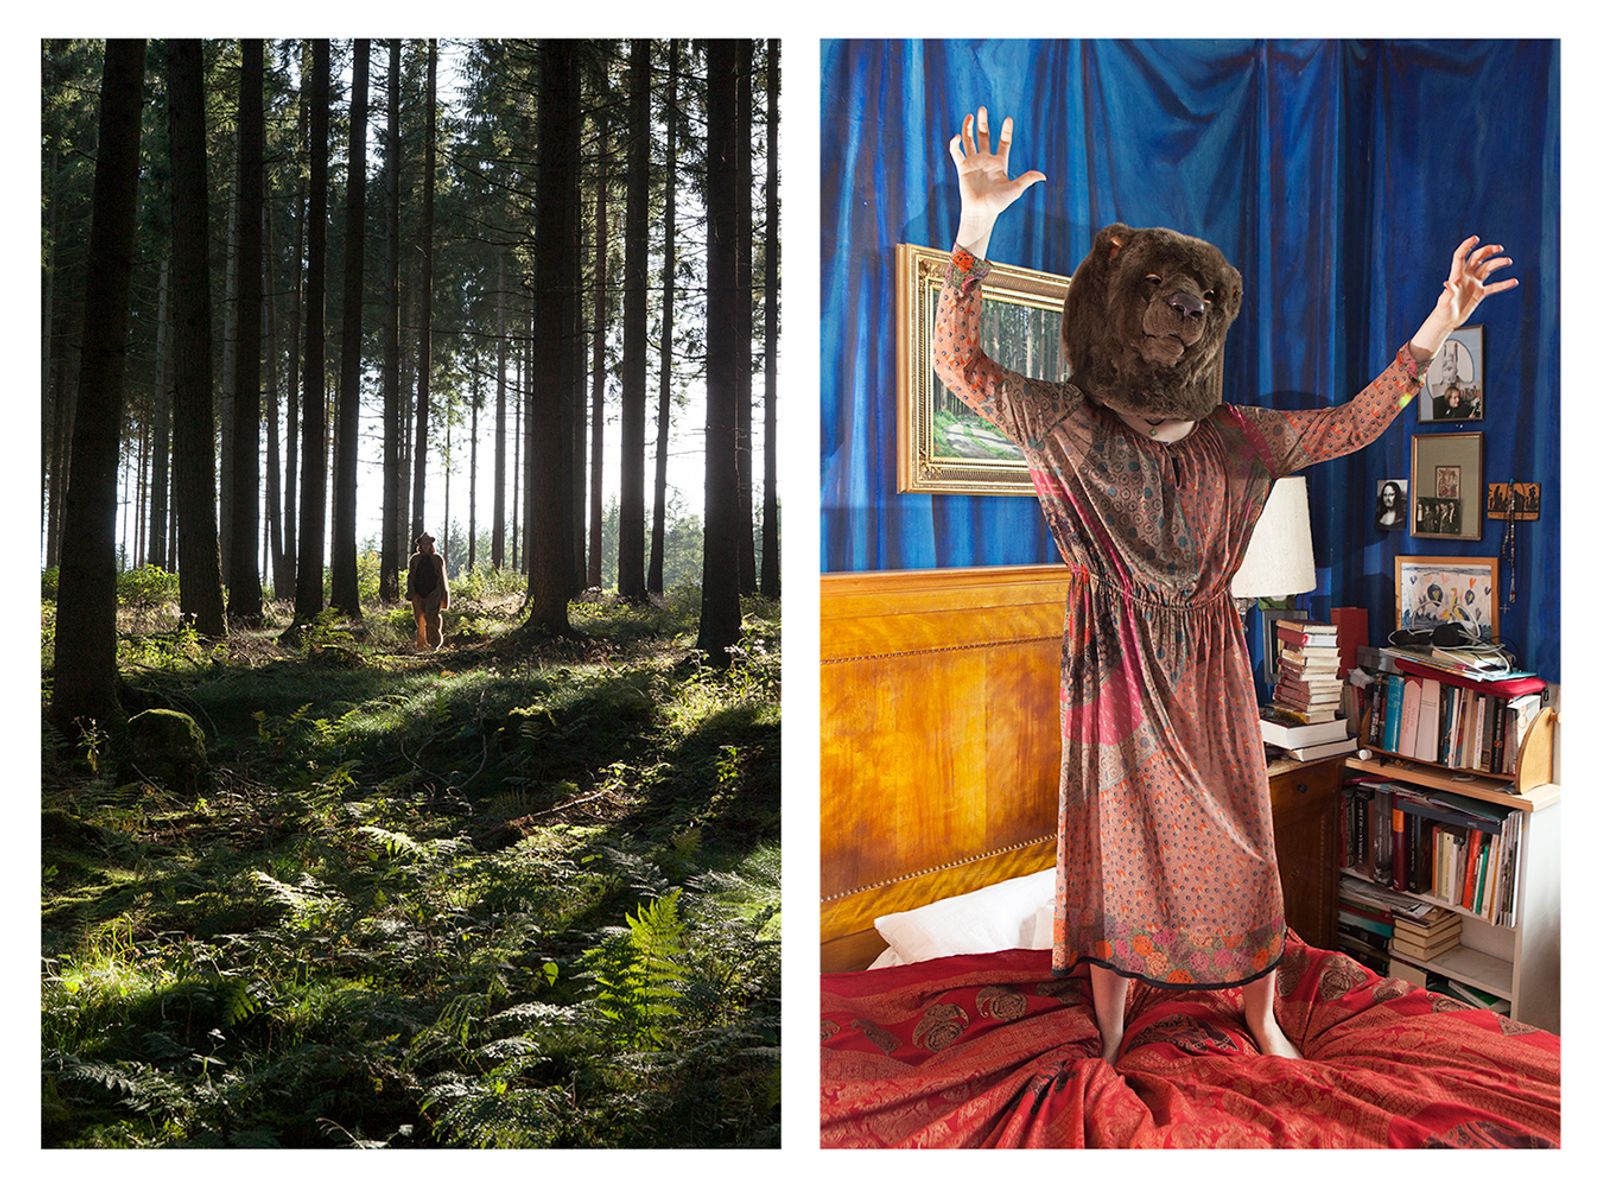 © Ute Behrend - Bear Girl in forest & Bear Girl in bedroom